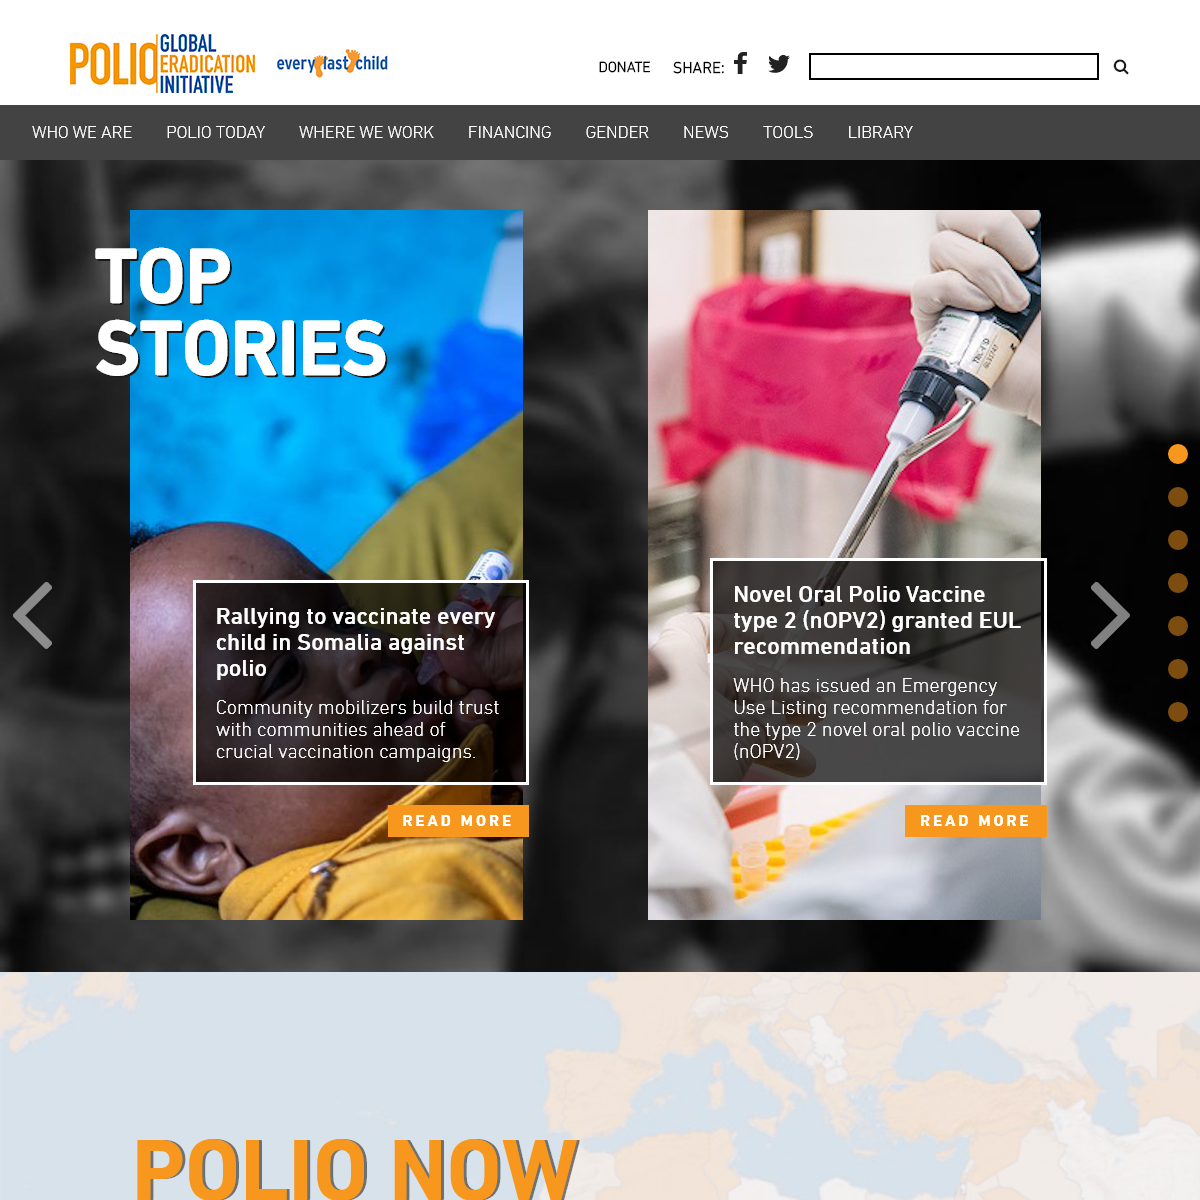 GPEI â€“ Global Polio Eradication Initiative